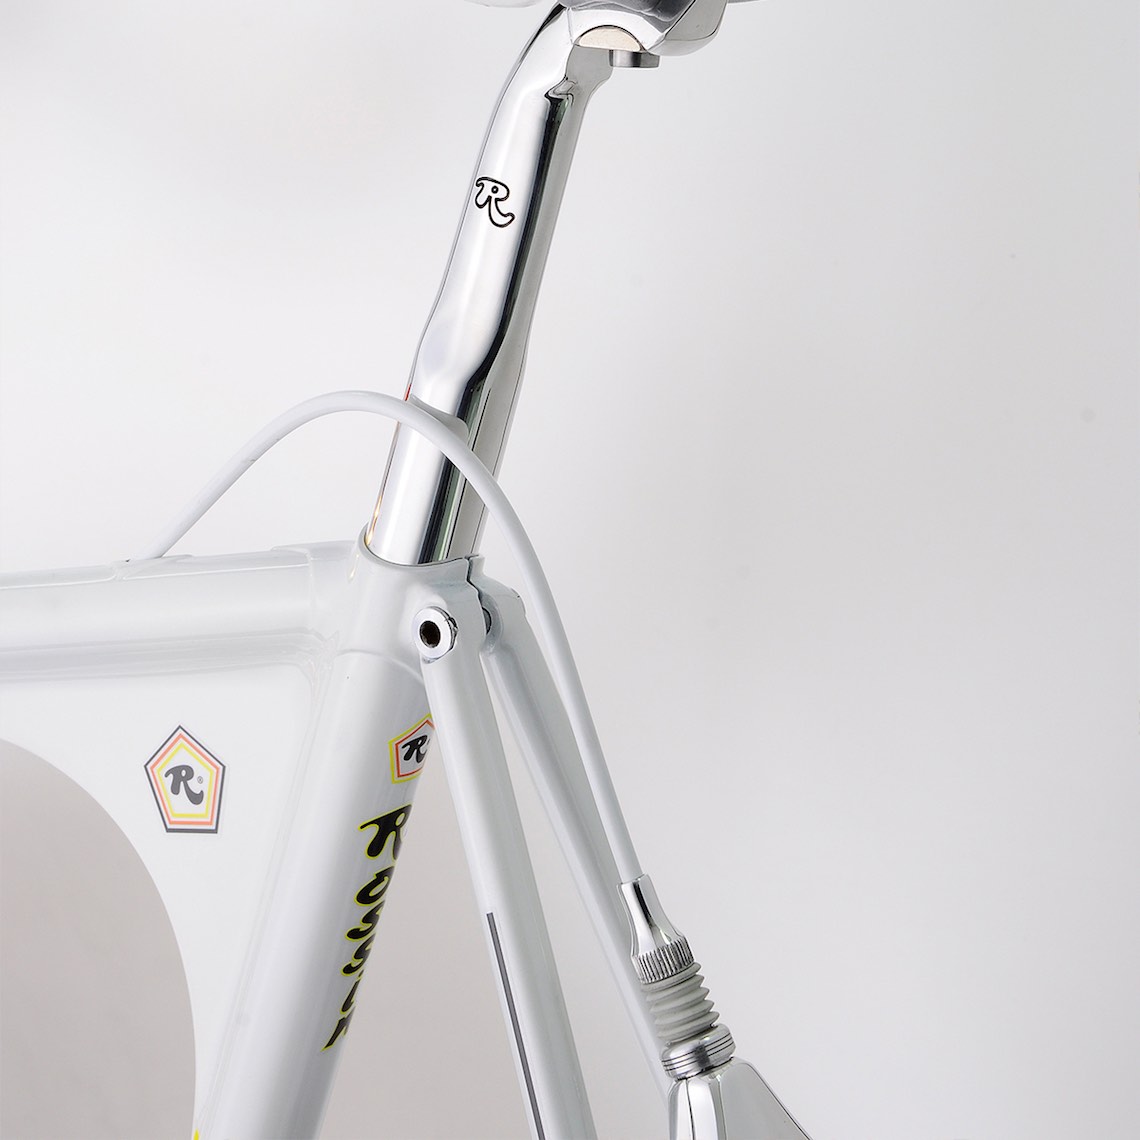 Rossin Futura CX4_Vintage_Luxury_Bicycle_7